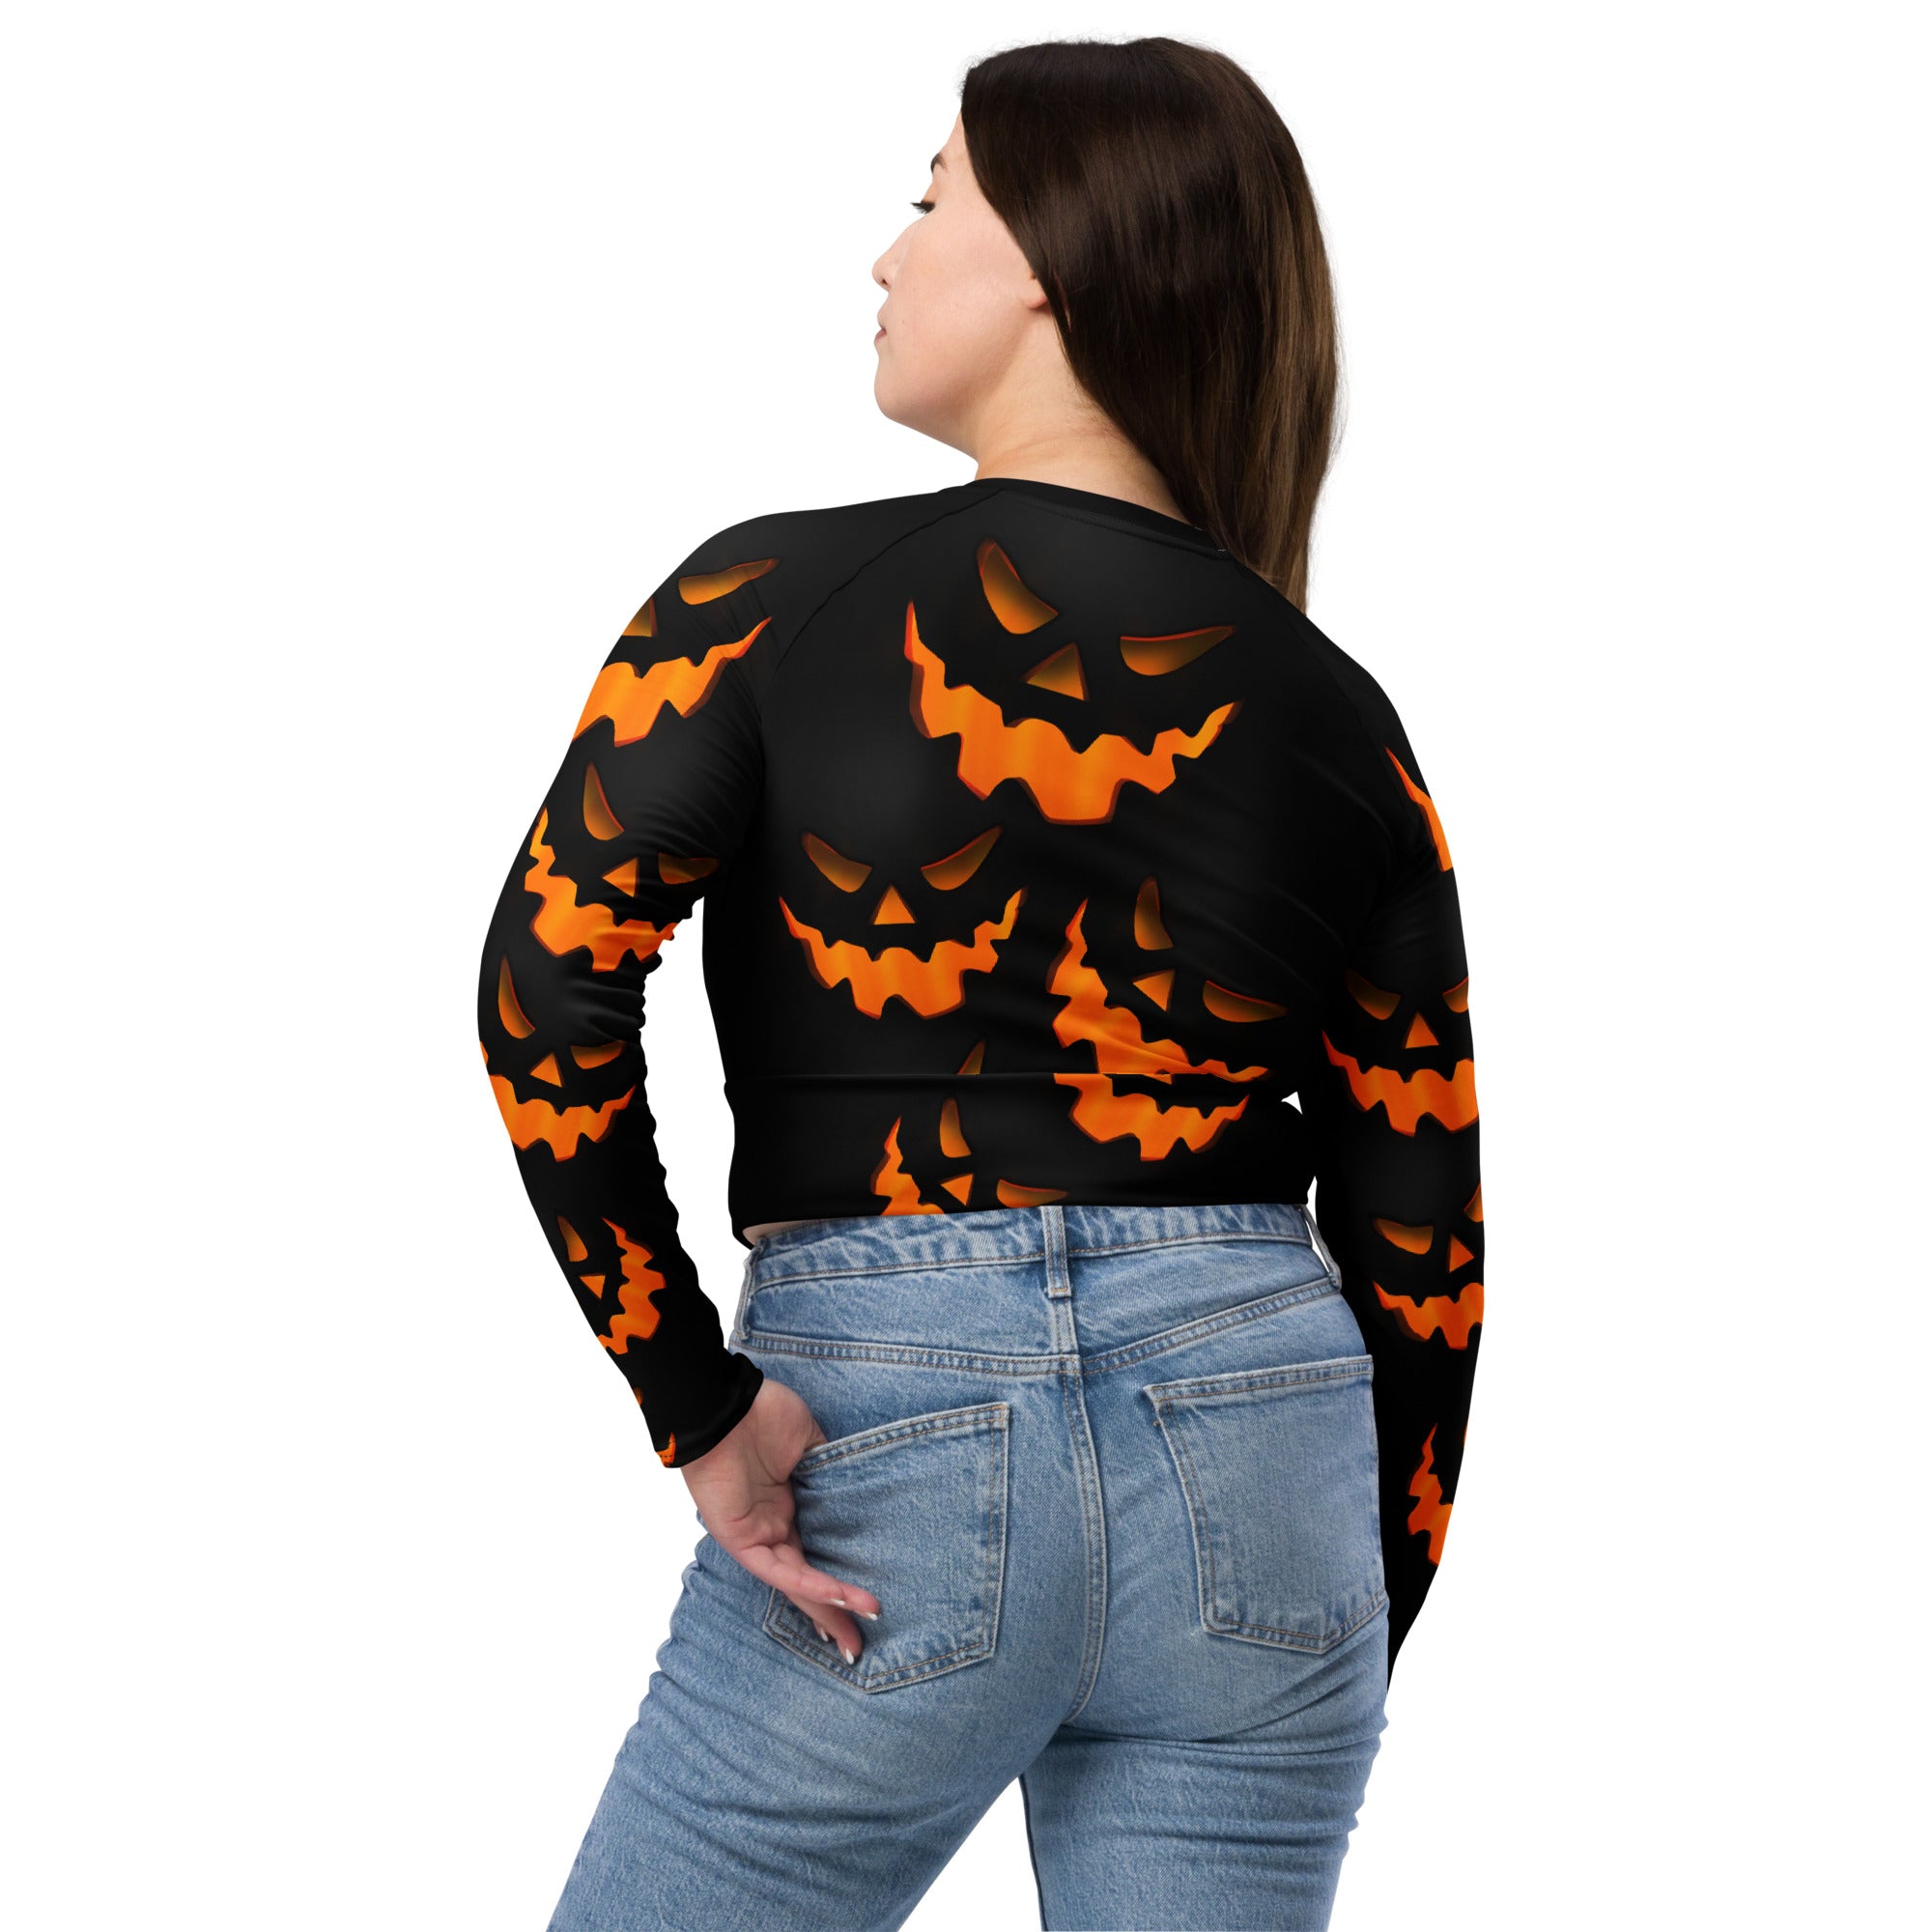 Spooky Pumpkin Halloween Recycled Long-sleeve Crop Top